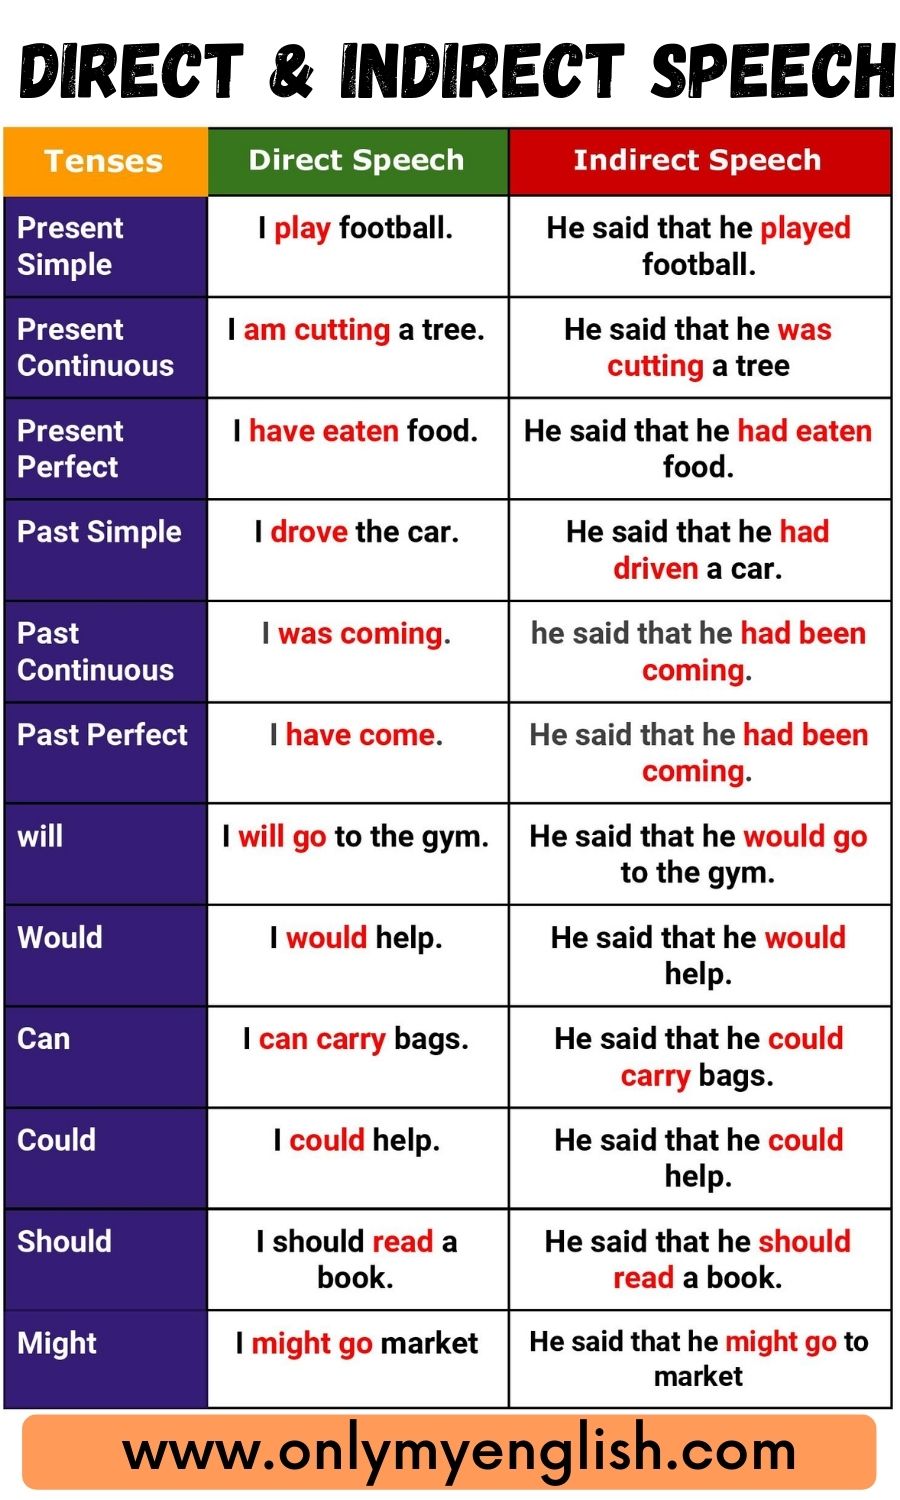 write 5 examples of indirect speech